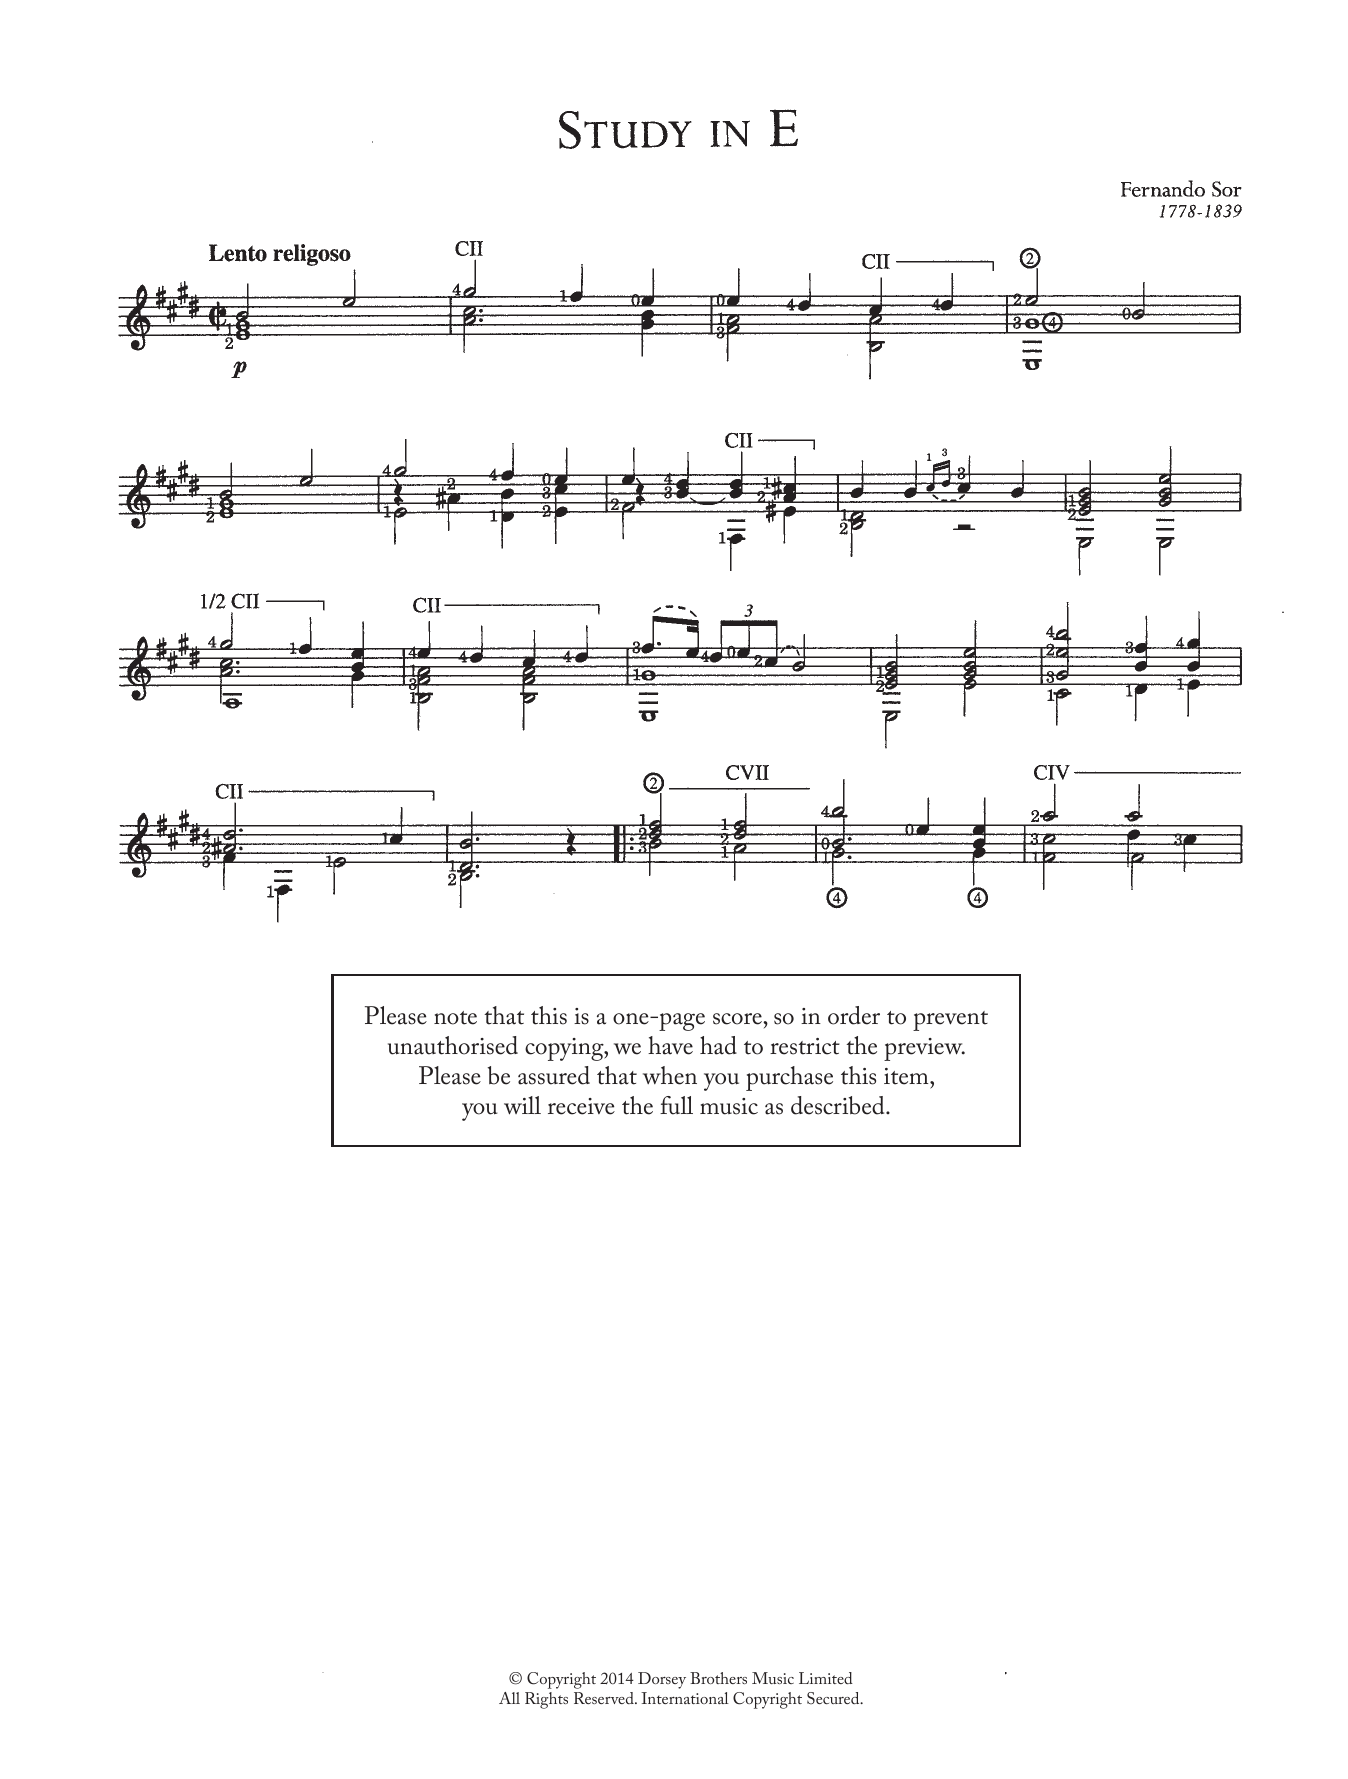 Download Fernando Sor Study In E Sheet Music